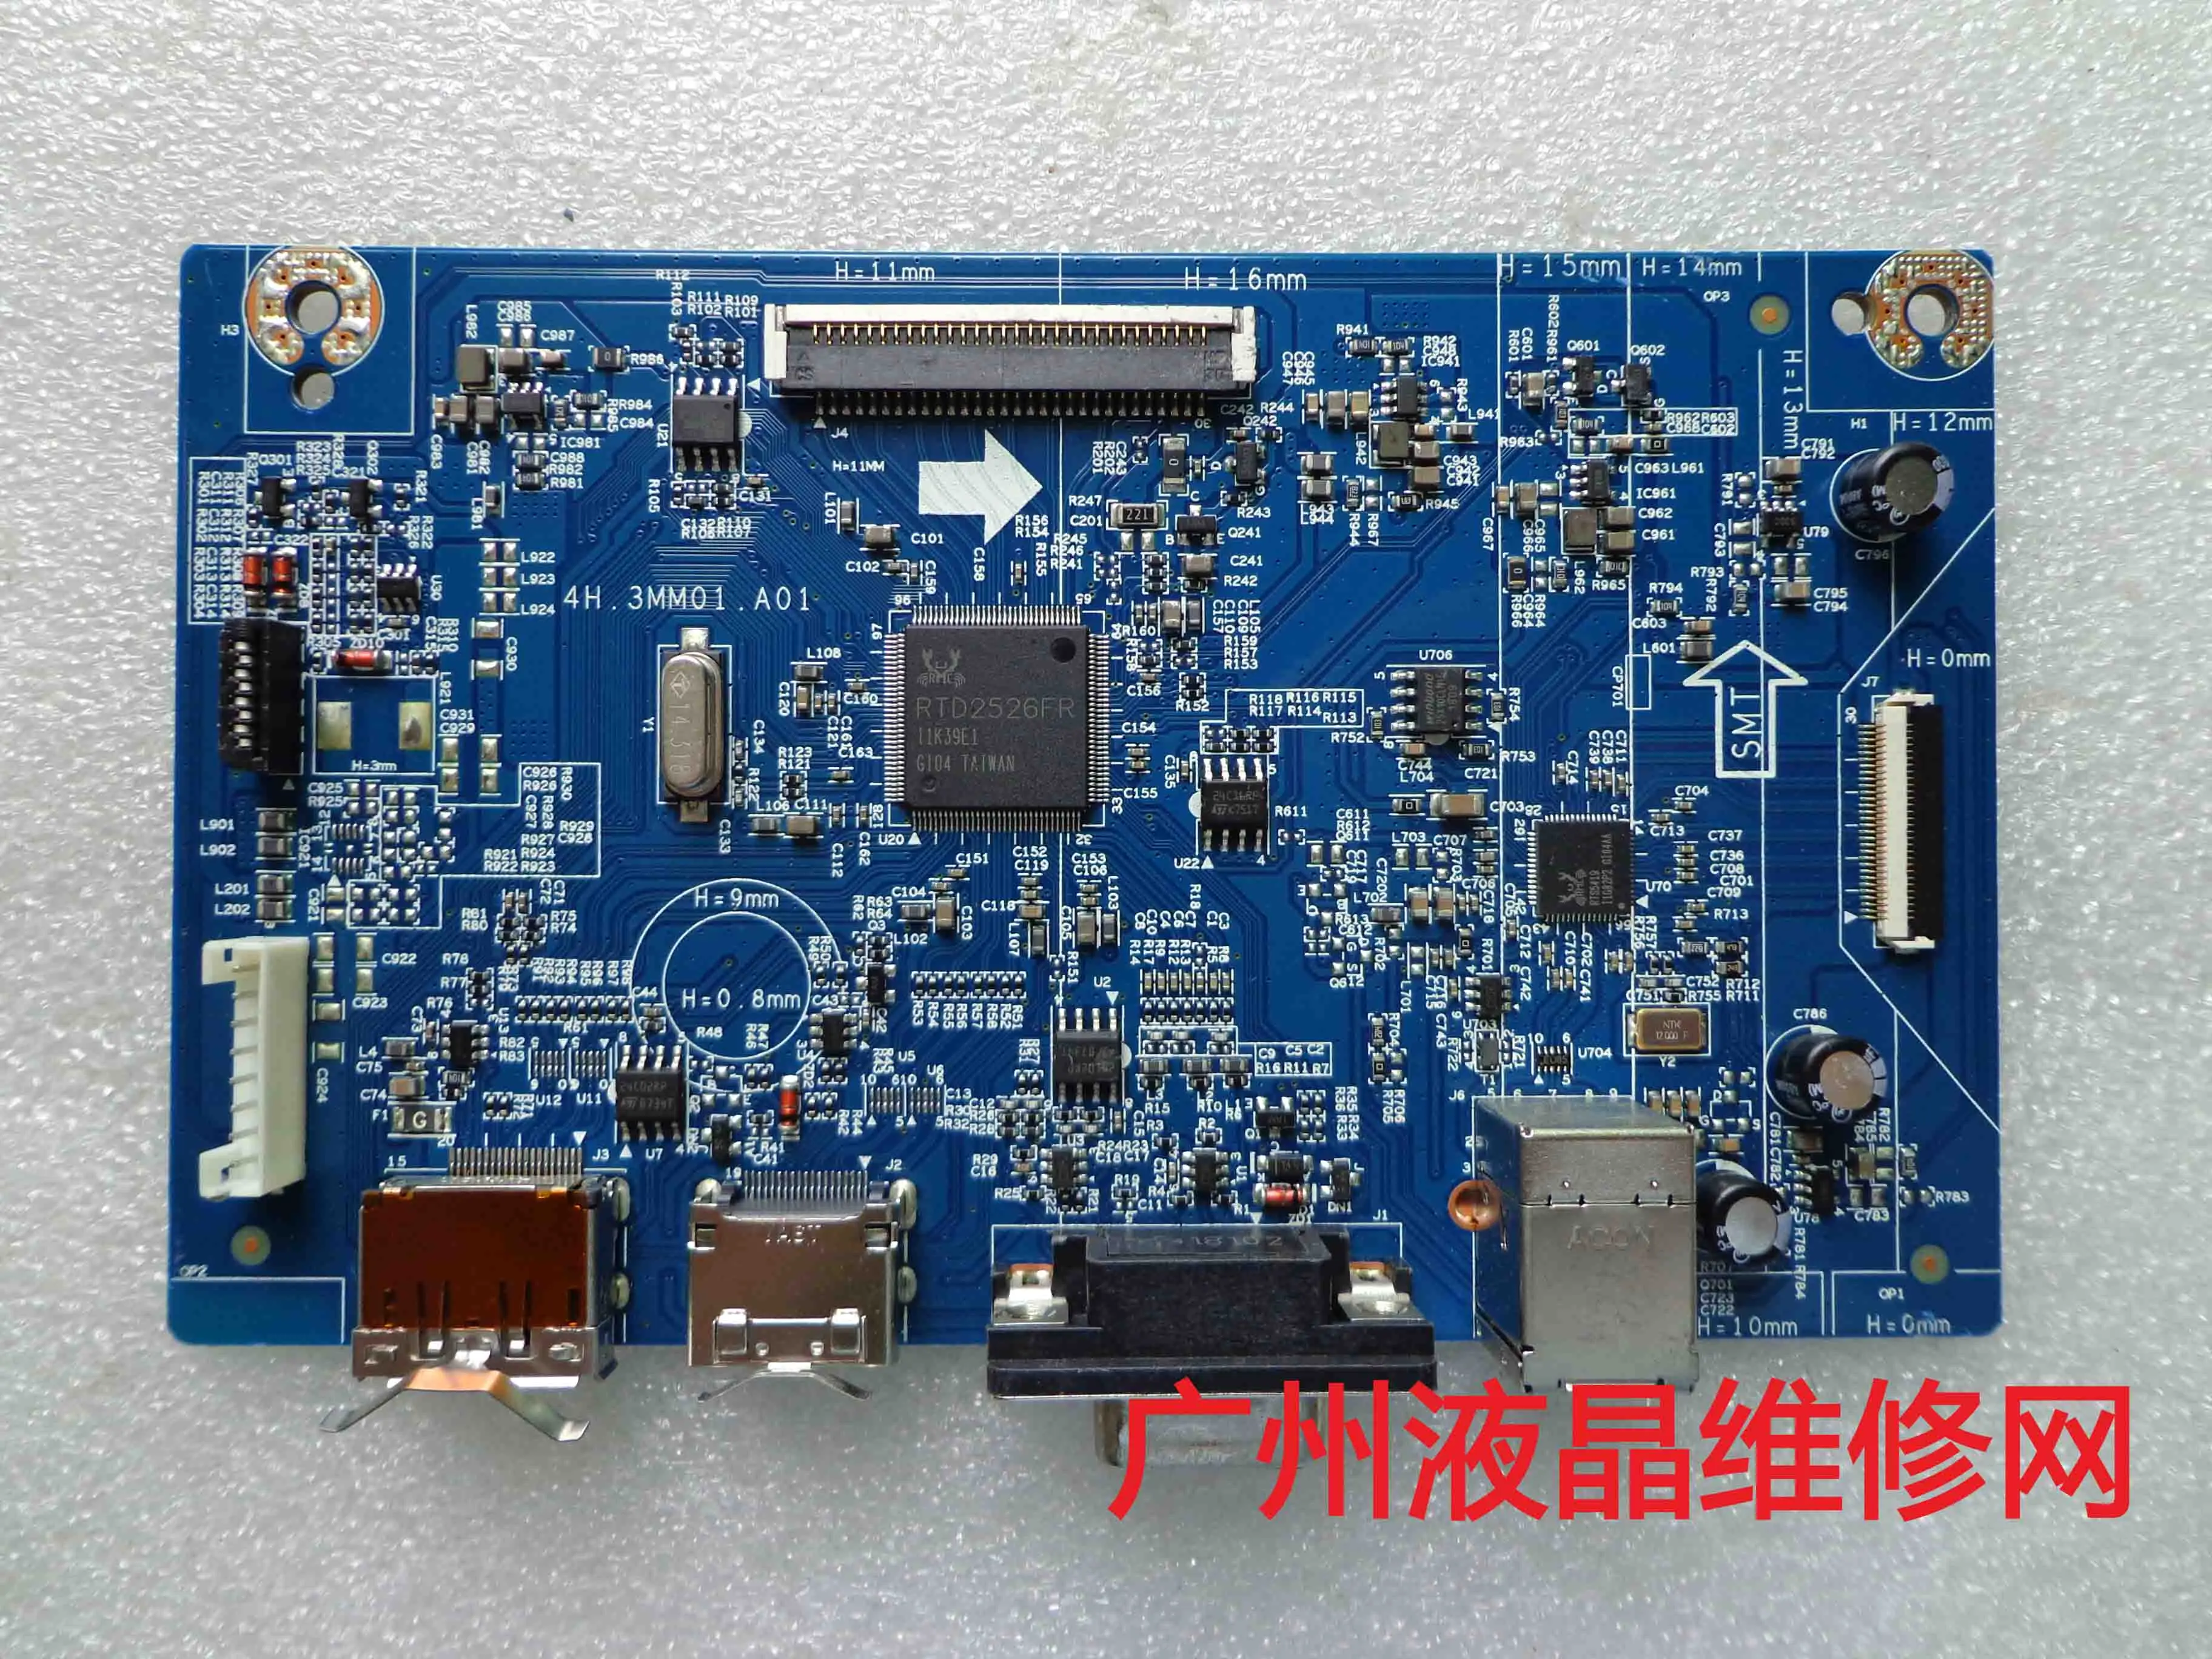 

HP E243 driver board 4H.3MM01.A01 mainboard screen MV238FHM-N20